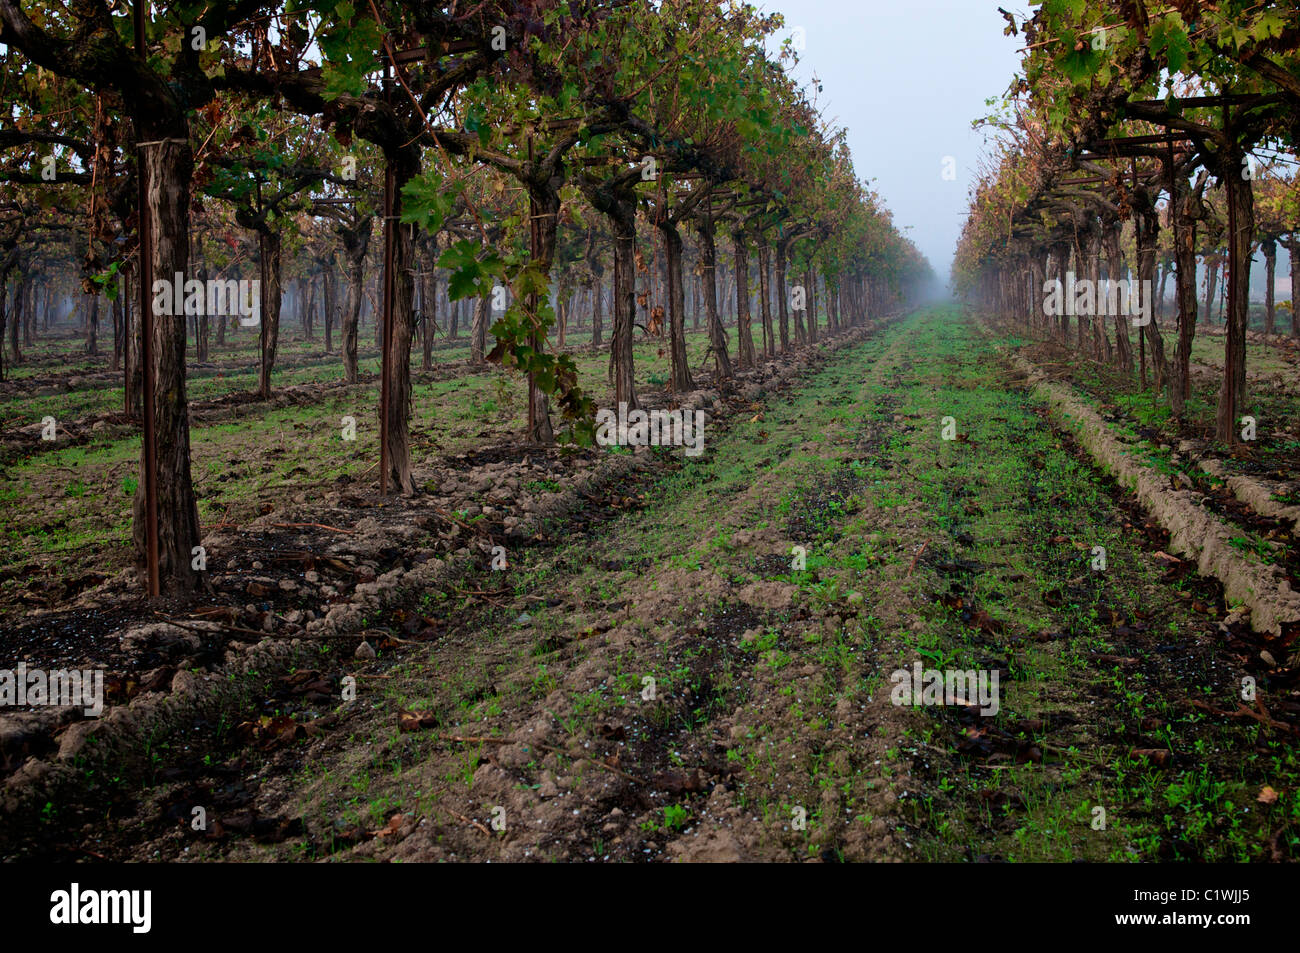 Vines in a vineyard, Lodi, California, USA Stock Photo